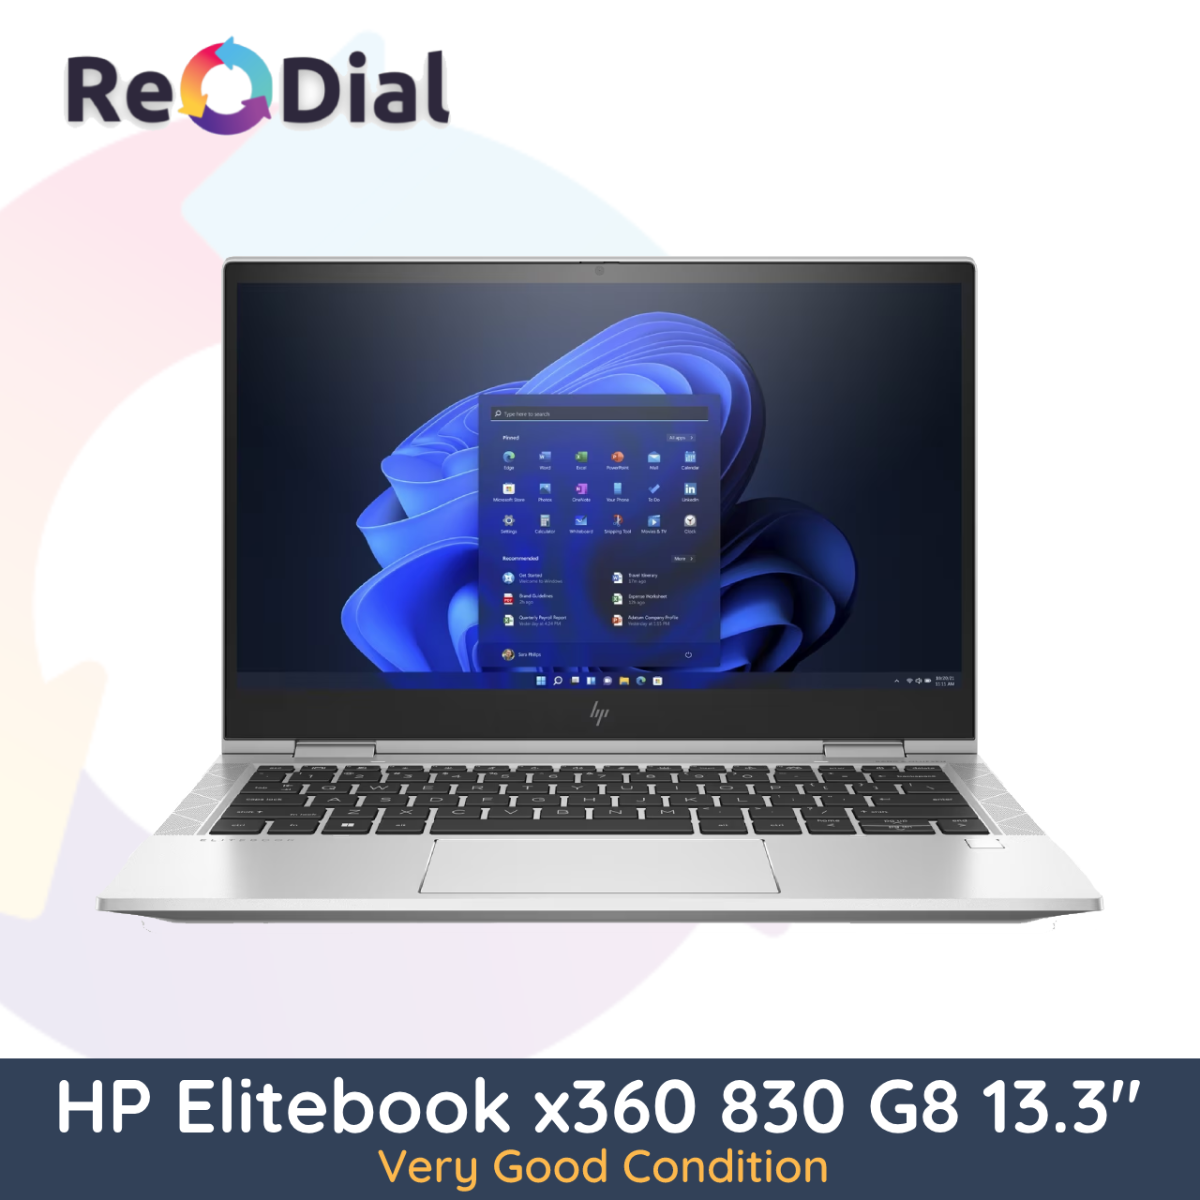 HP Elitebook x360 830 G8 13.3" Laptop i5-1145G7 256GB 8GB RAM - Very Good Condition